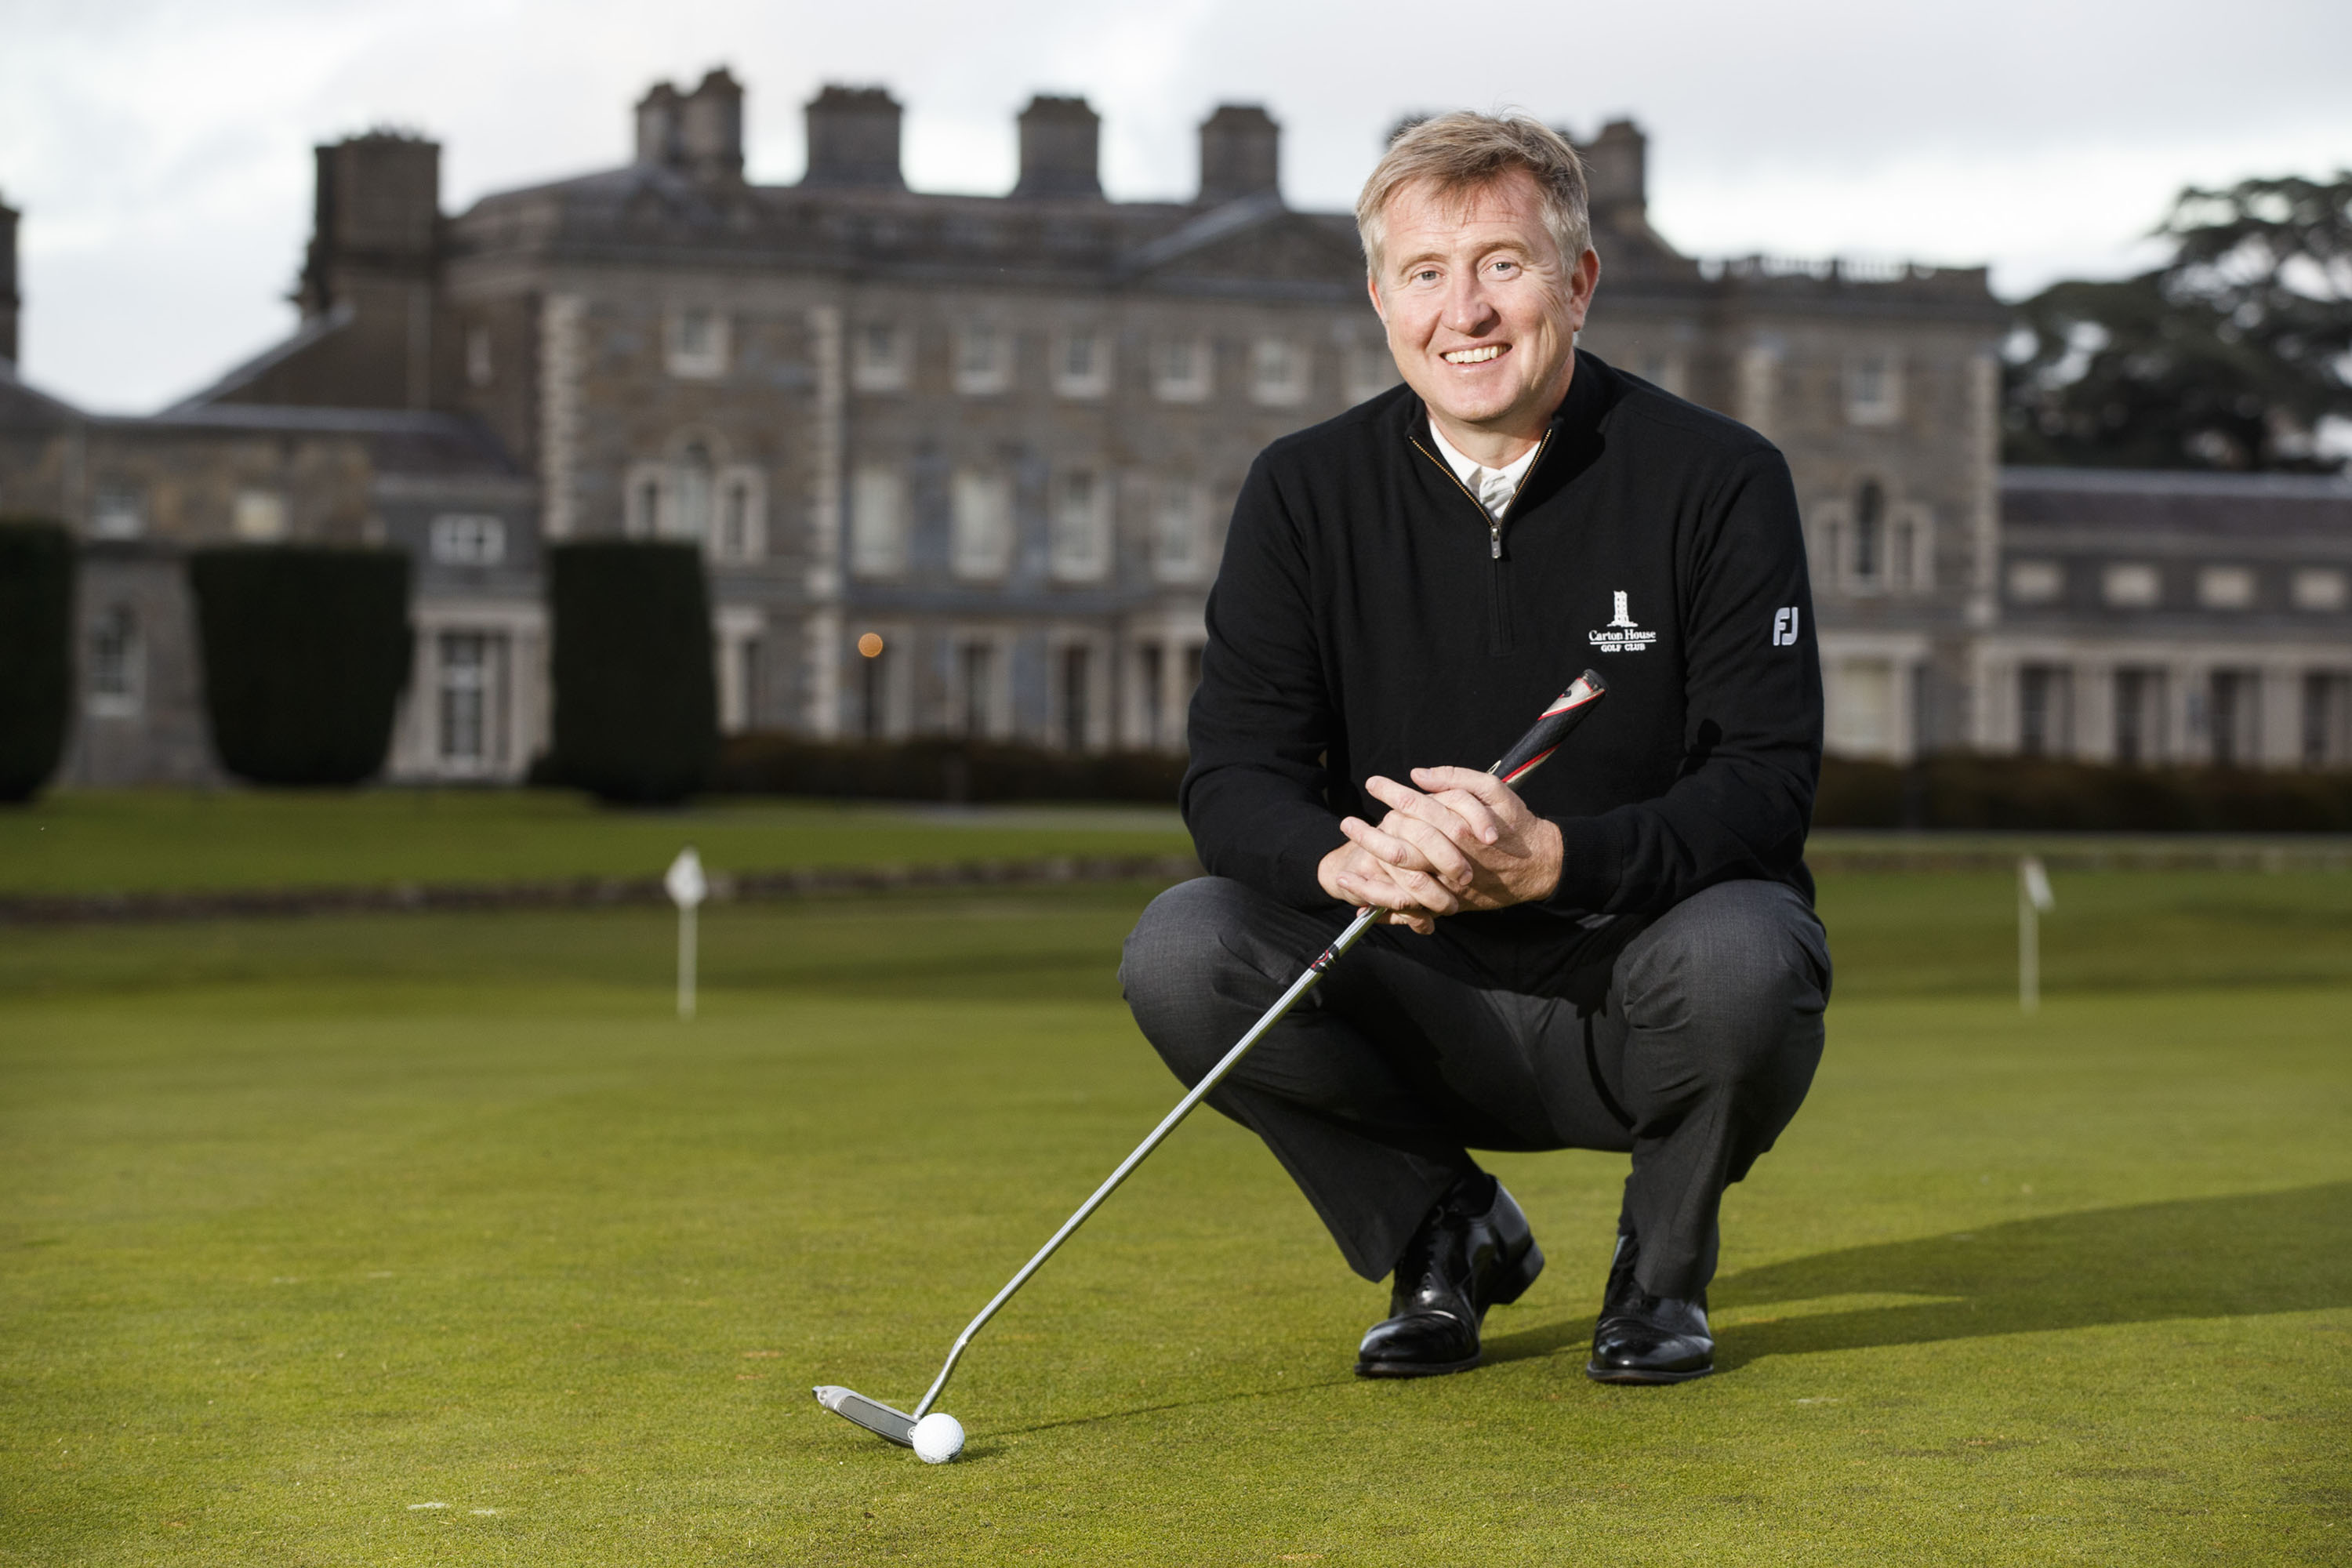 David Kearney PGA Appointed Director of Golf at Carton House